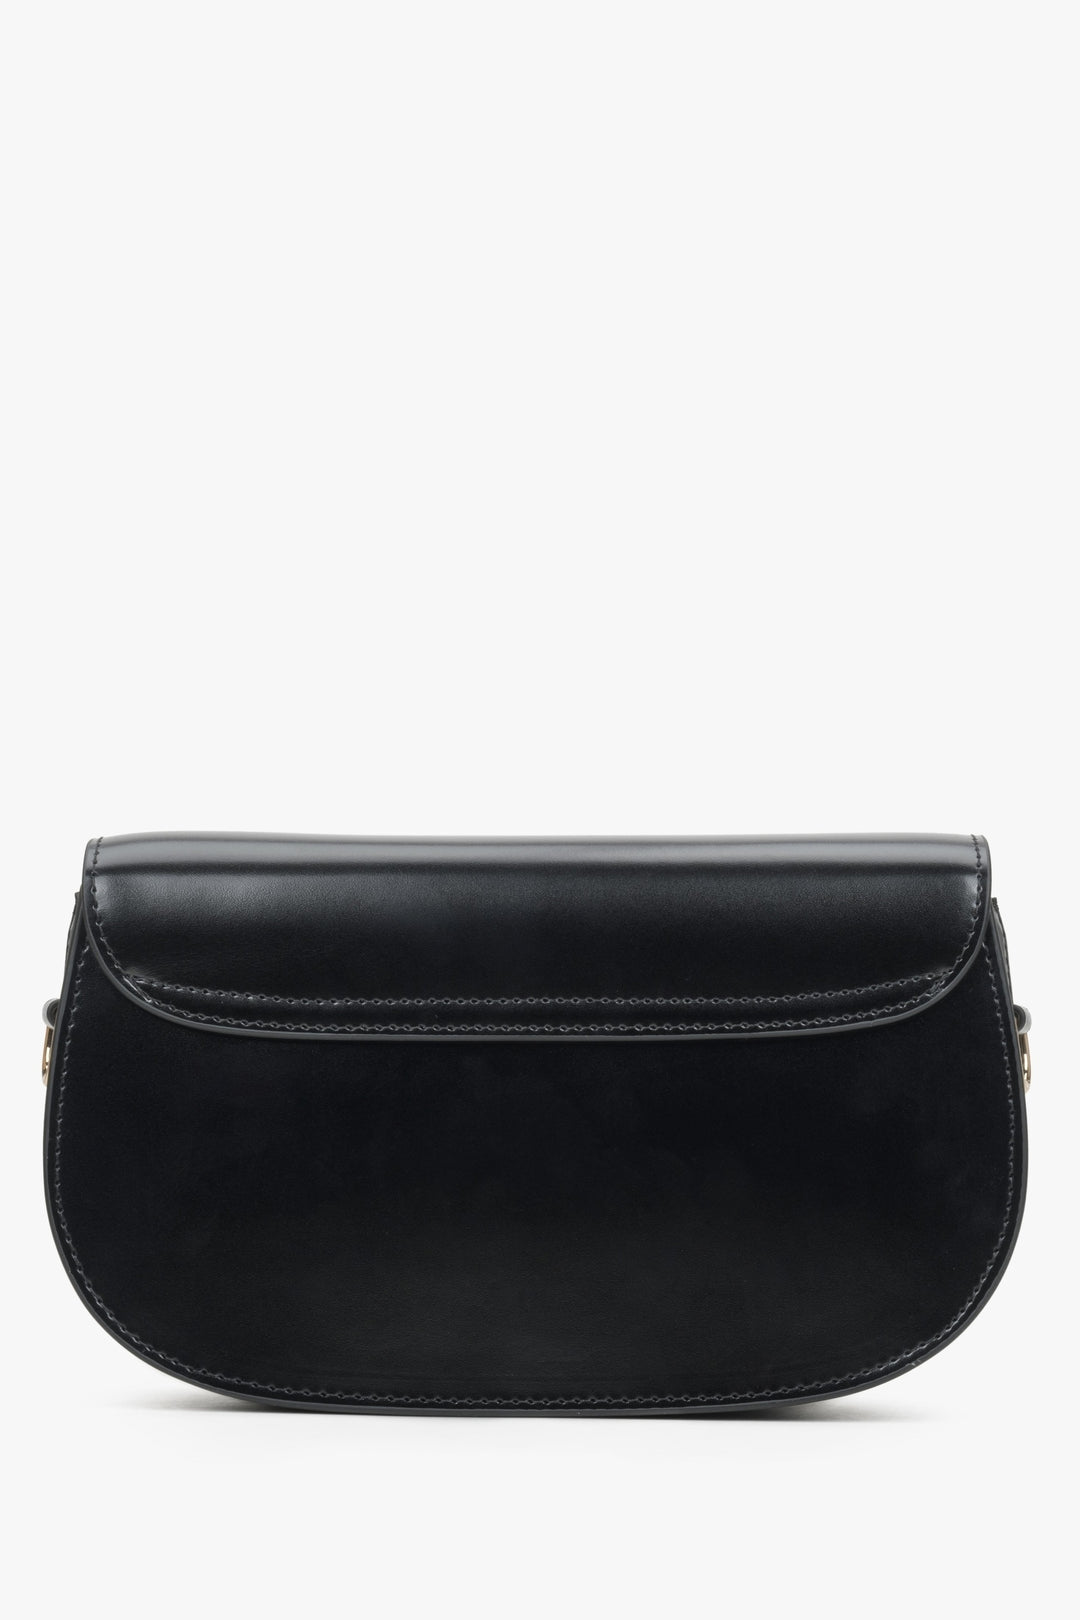 Estro women's leather bag with adjustable strap, black colour - back side.